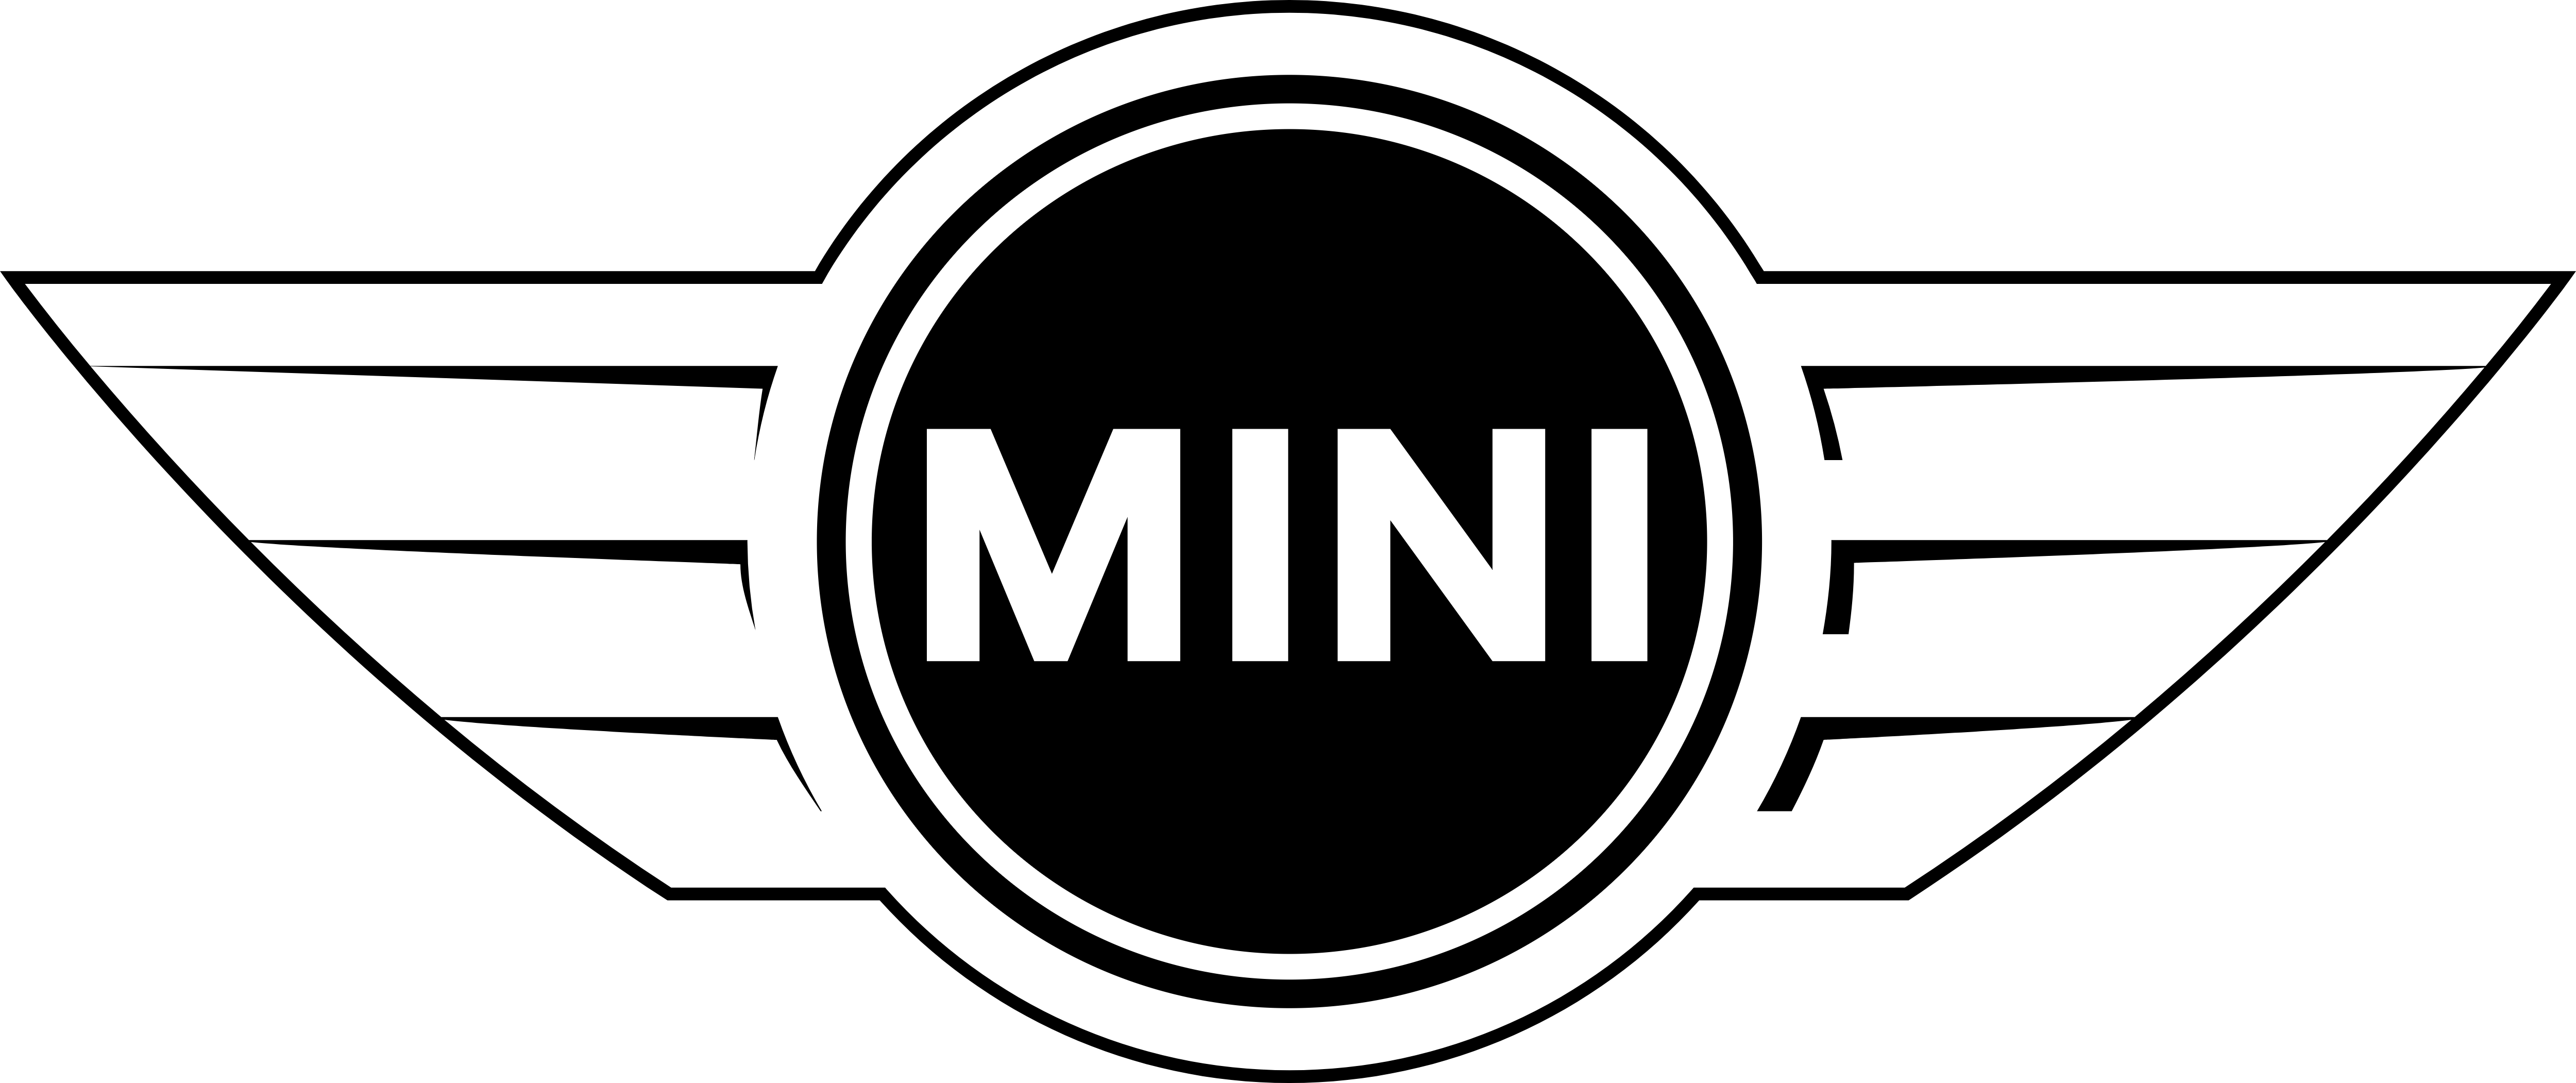 Download Logo Mini Cooper Bmw Car Free Hq Image Hq Png Image Freepngimg